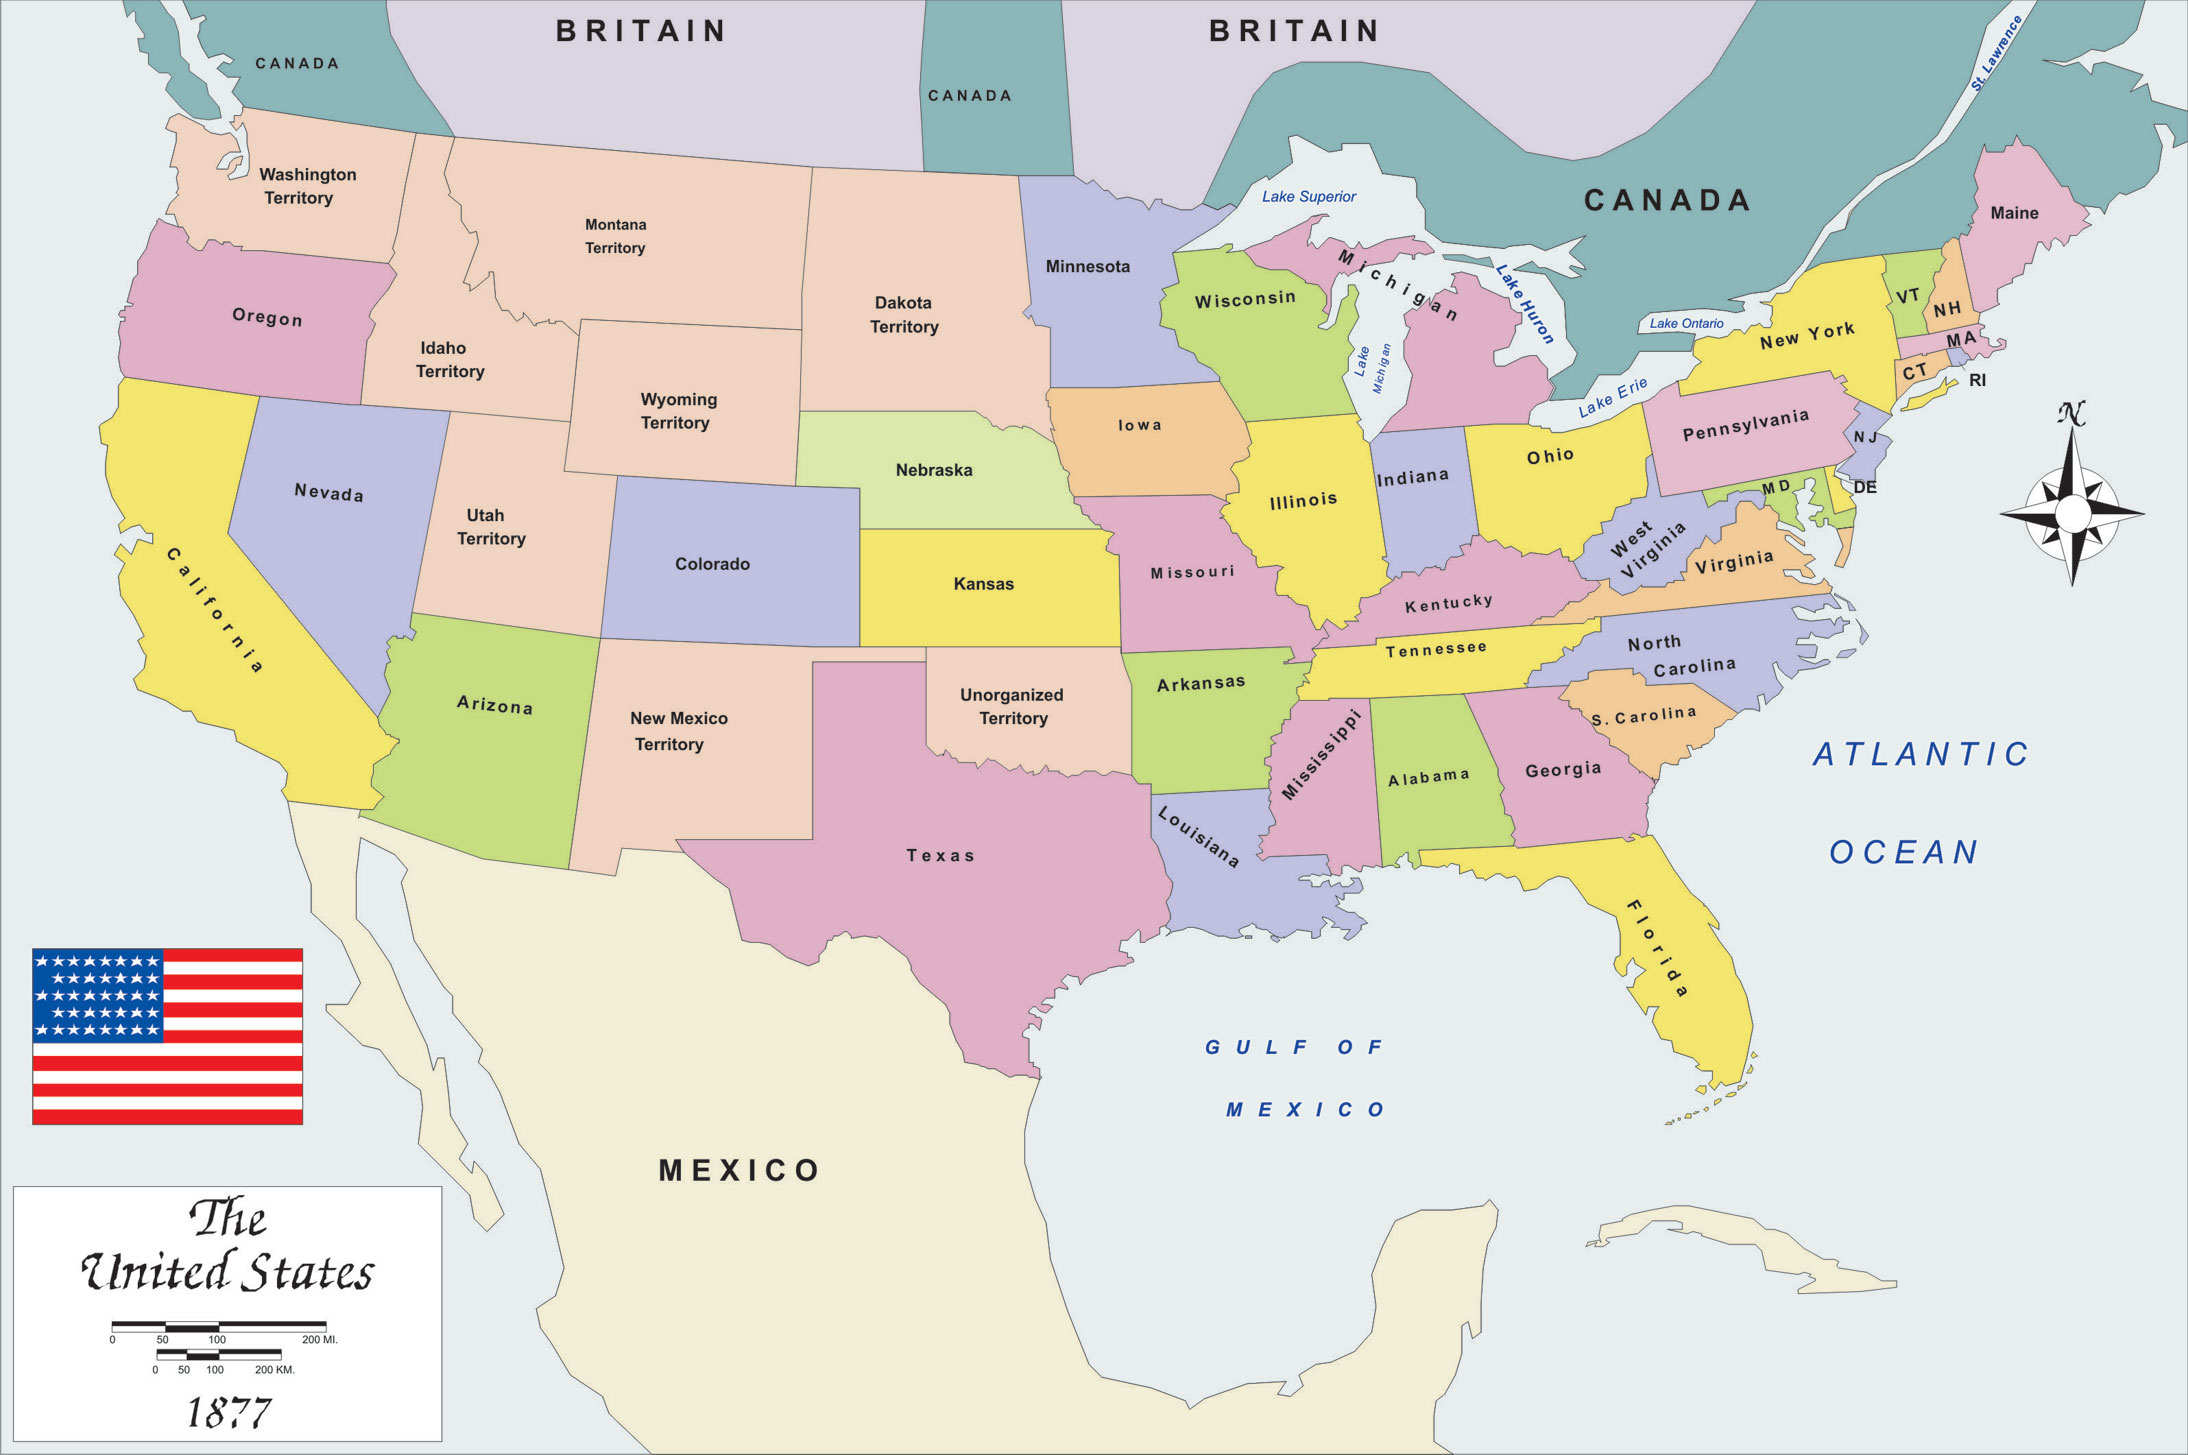 History map of USA 1877